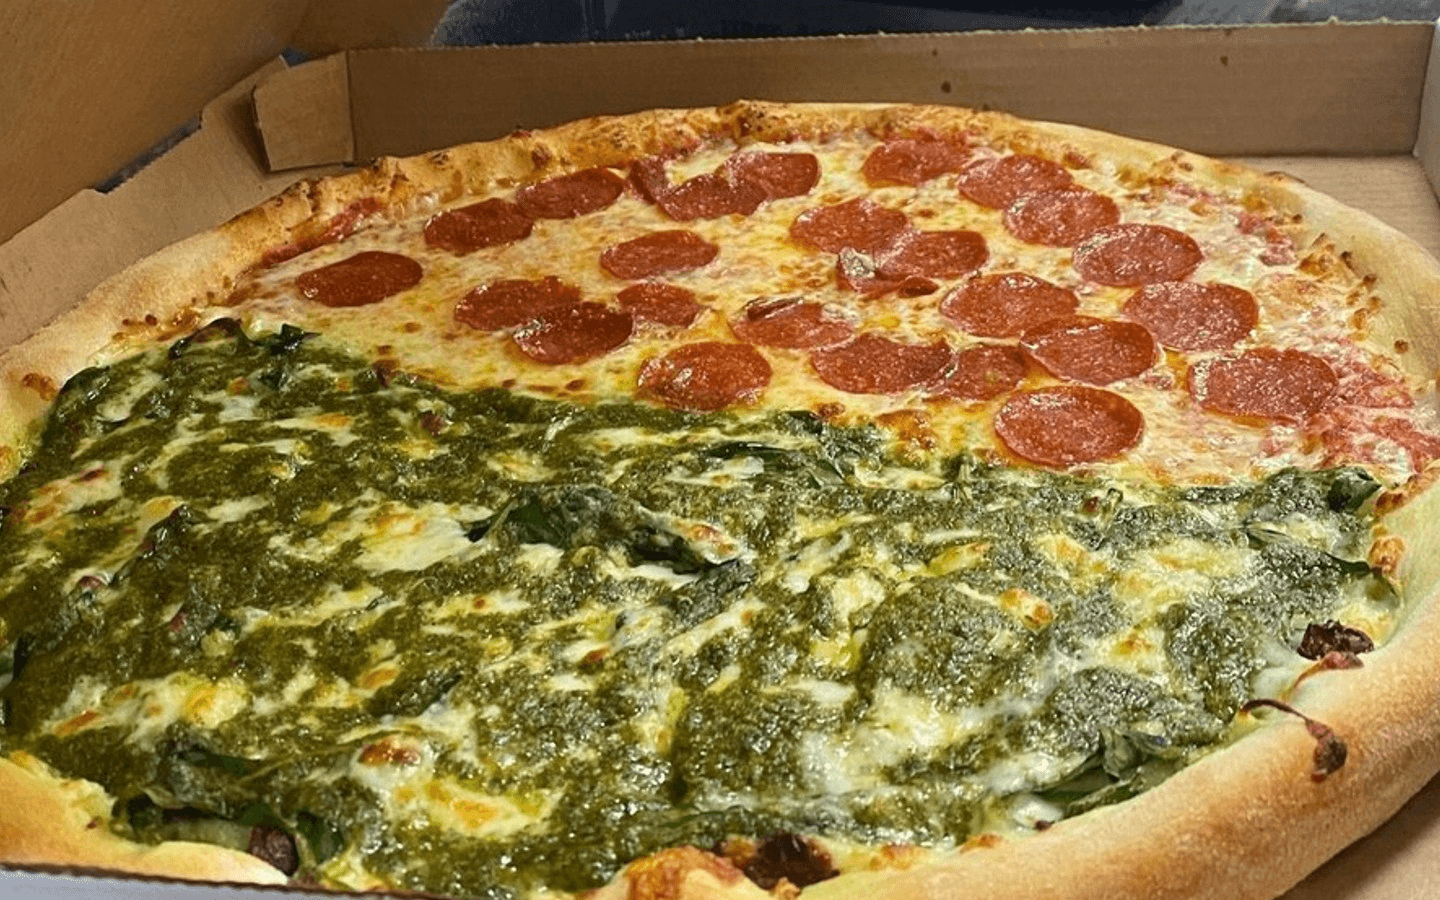 Fayzano's Pizza Rewards